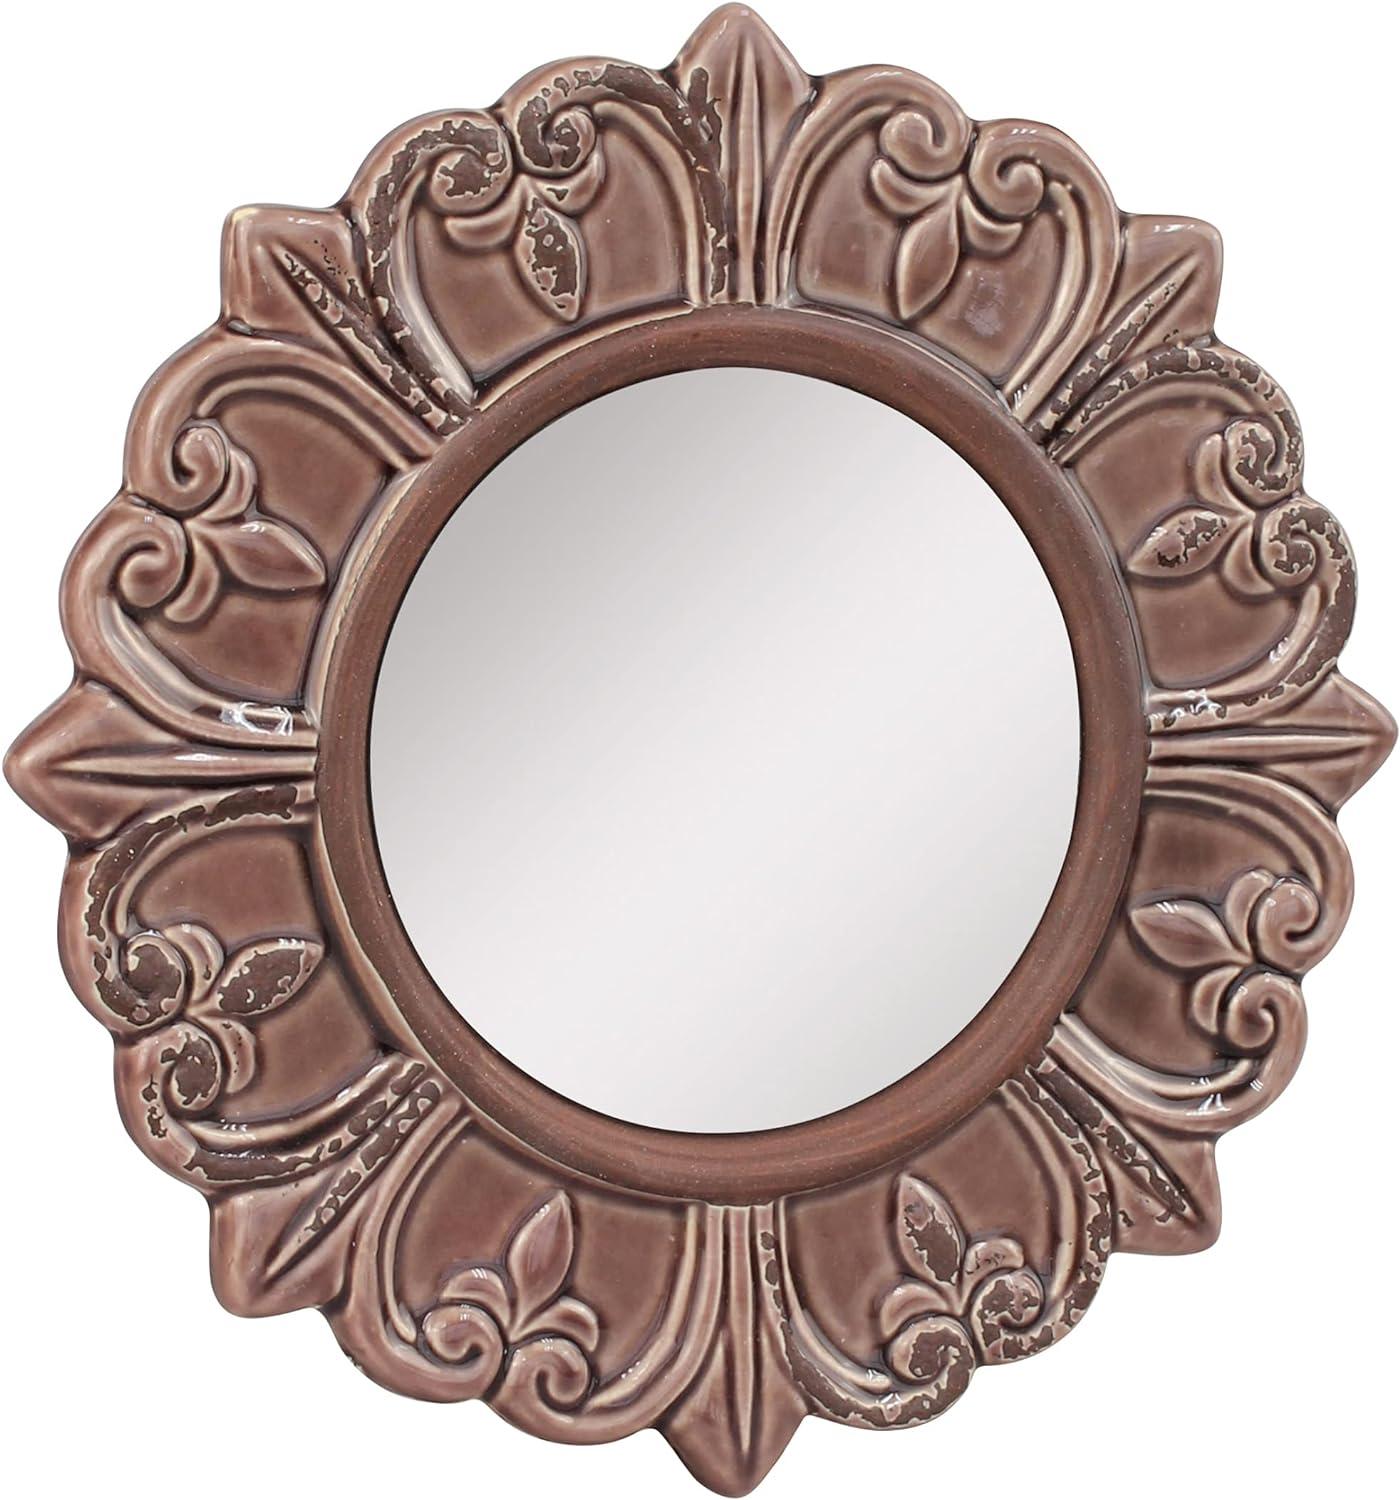 Elegant Parisian Fleur de Lis 9" Round Ceramic Wall Mirror in Warm Taupe